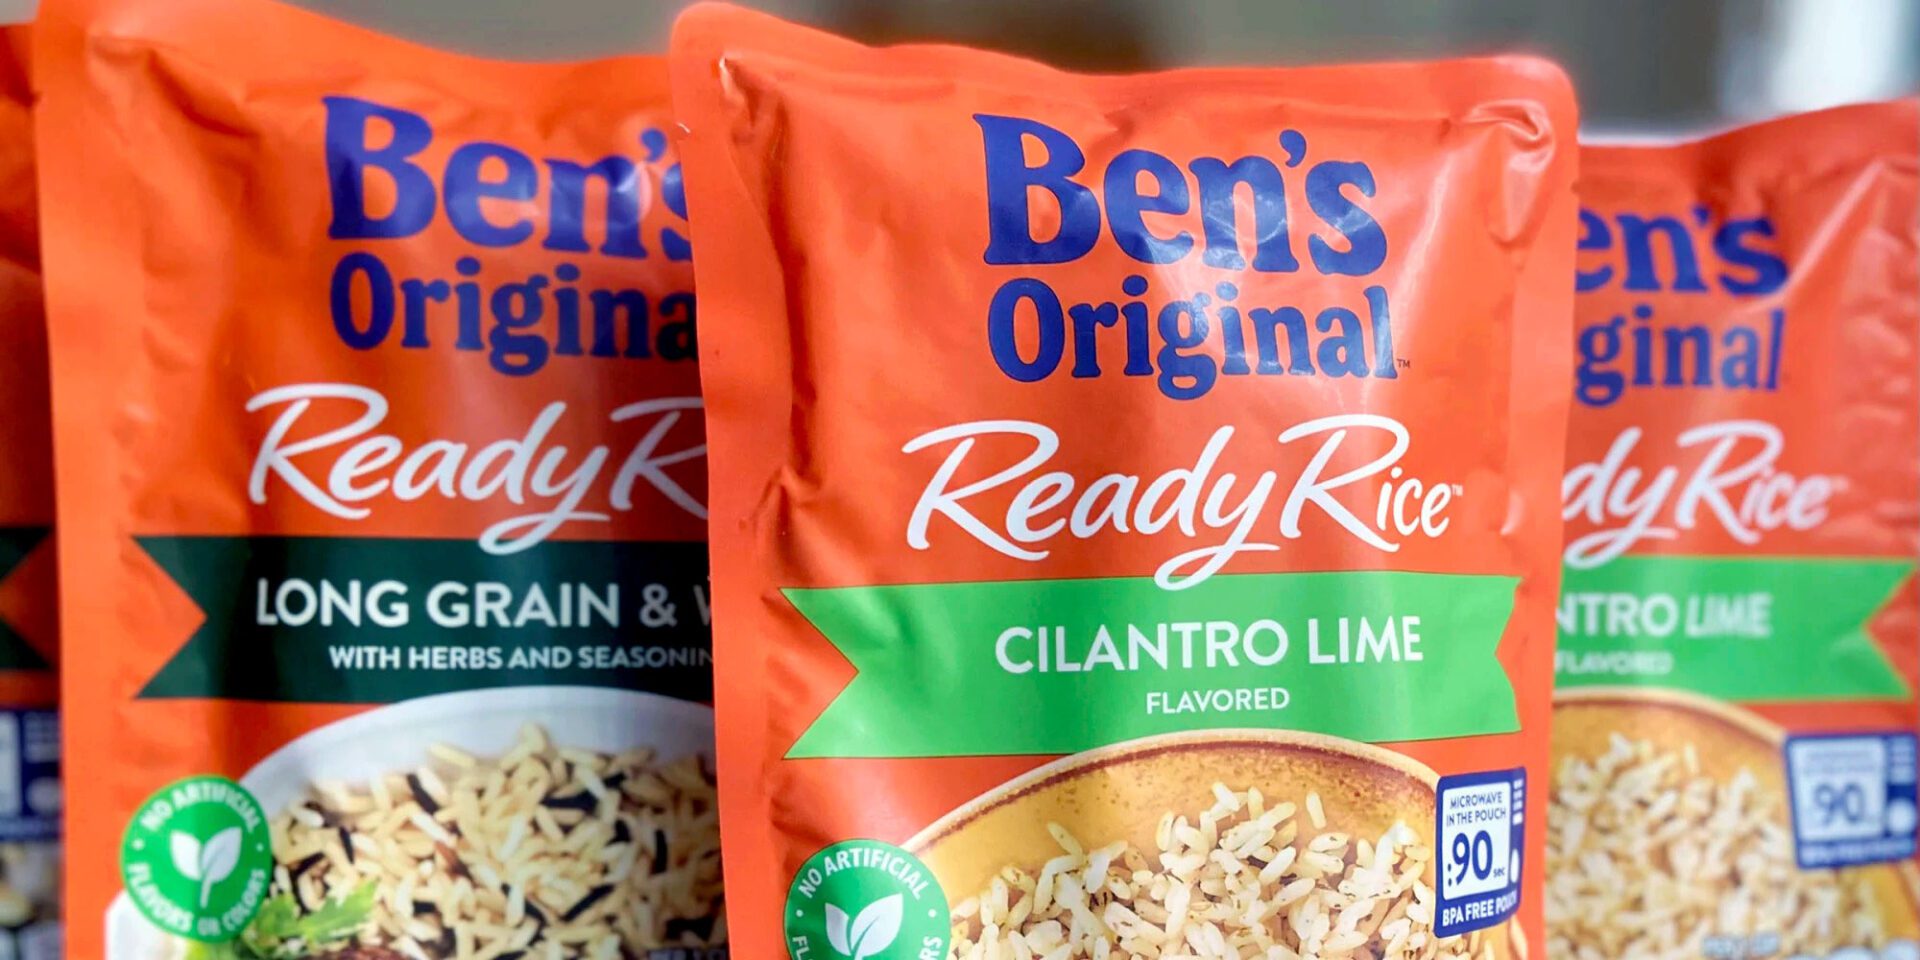 novo redesign das embalagens marca Uncle Ben's para Ben's Original